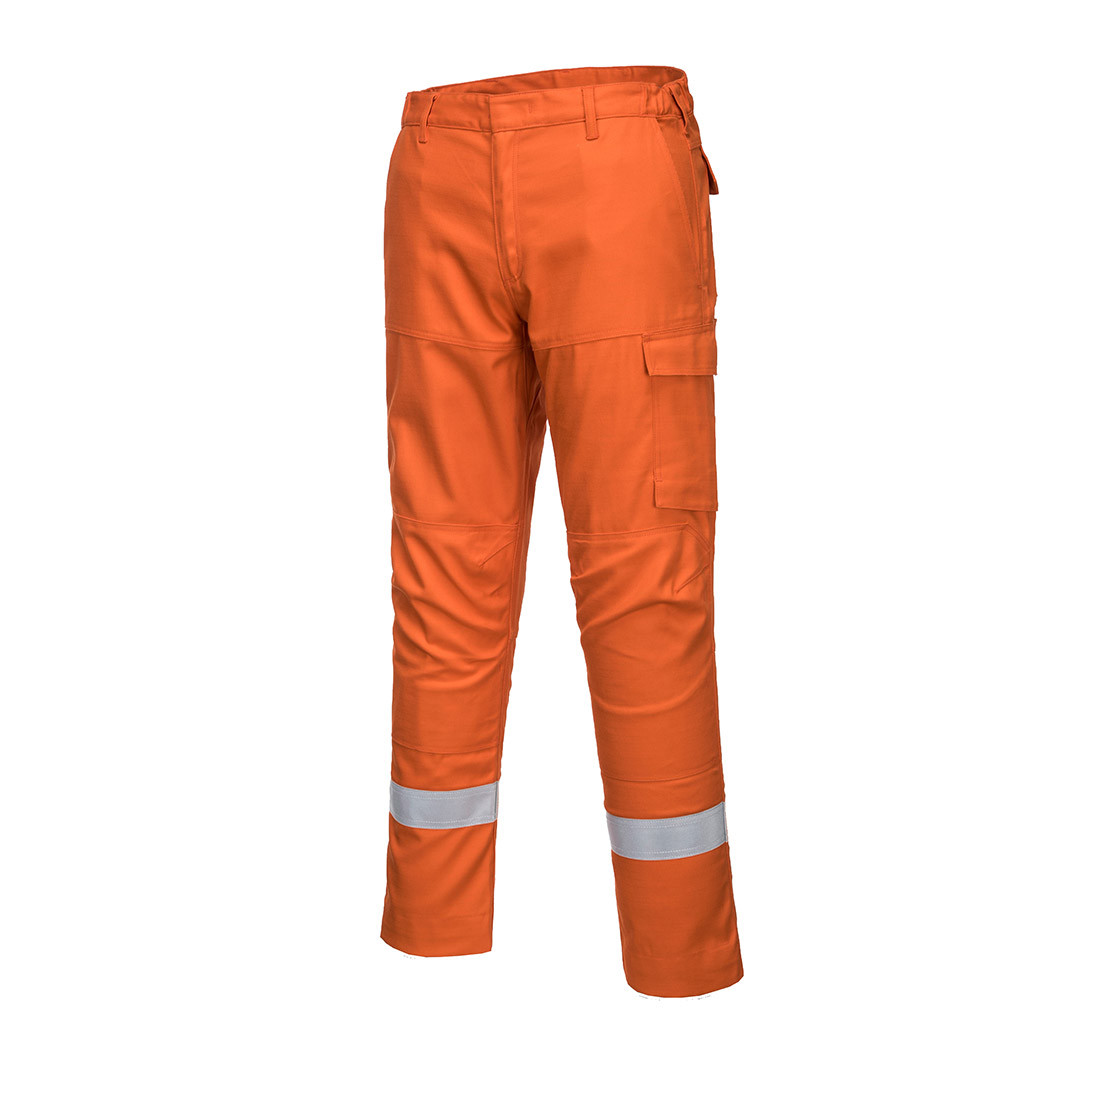 Pantaloni Bizflame Ultra - Imbracaminte de protectie